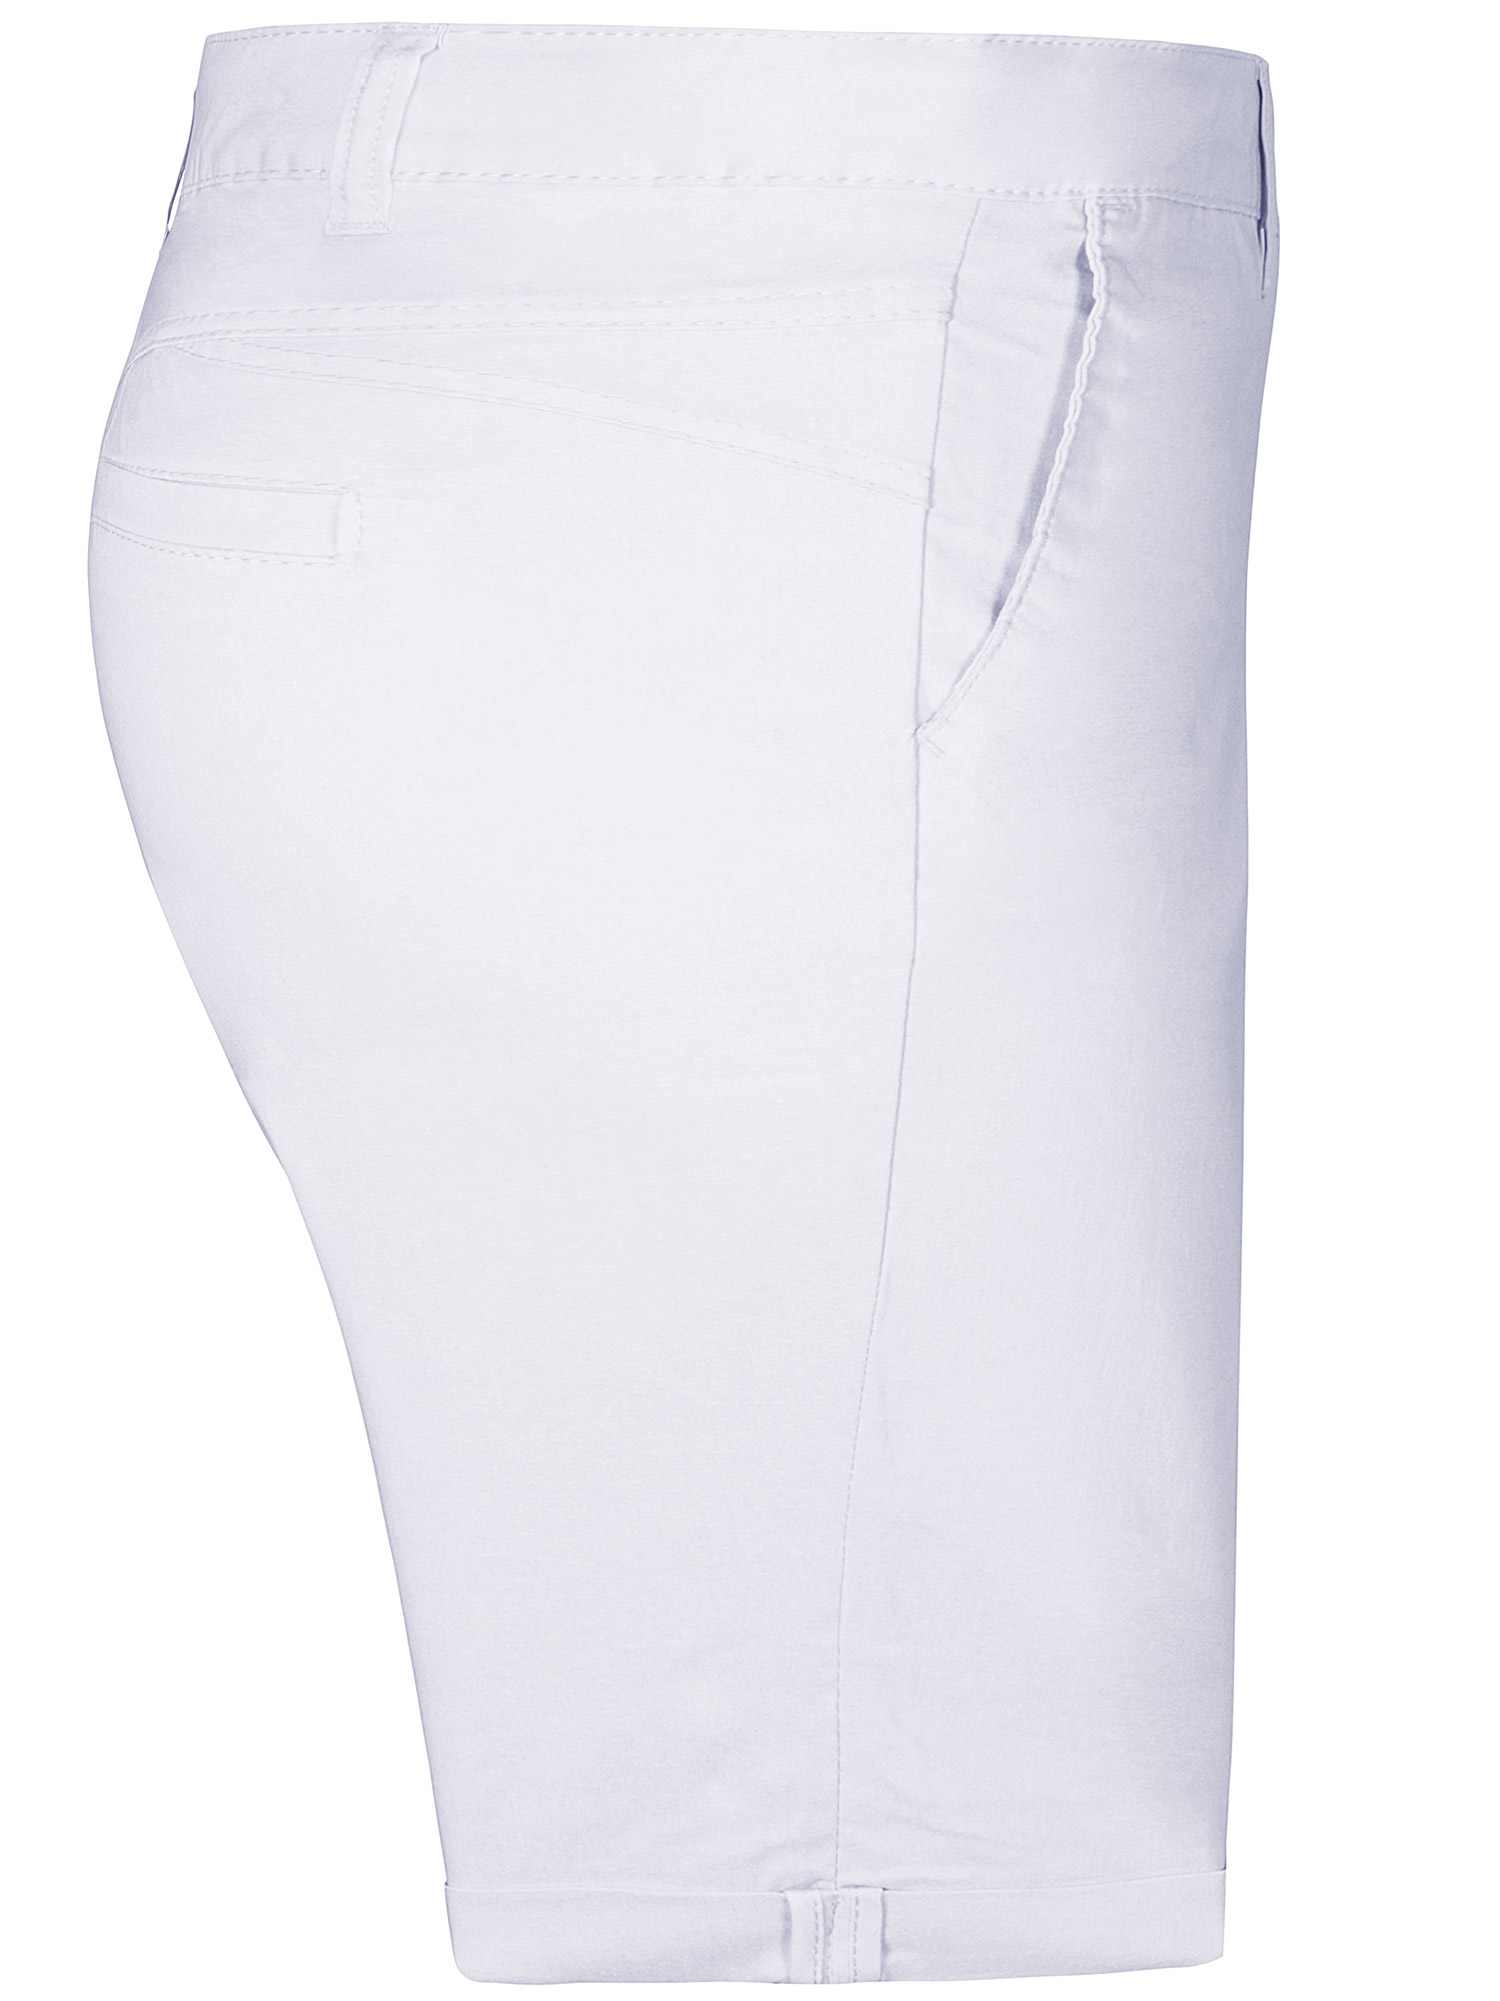 Hvite shorts i bengalin kvalitet fra Zhenzi